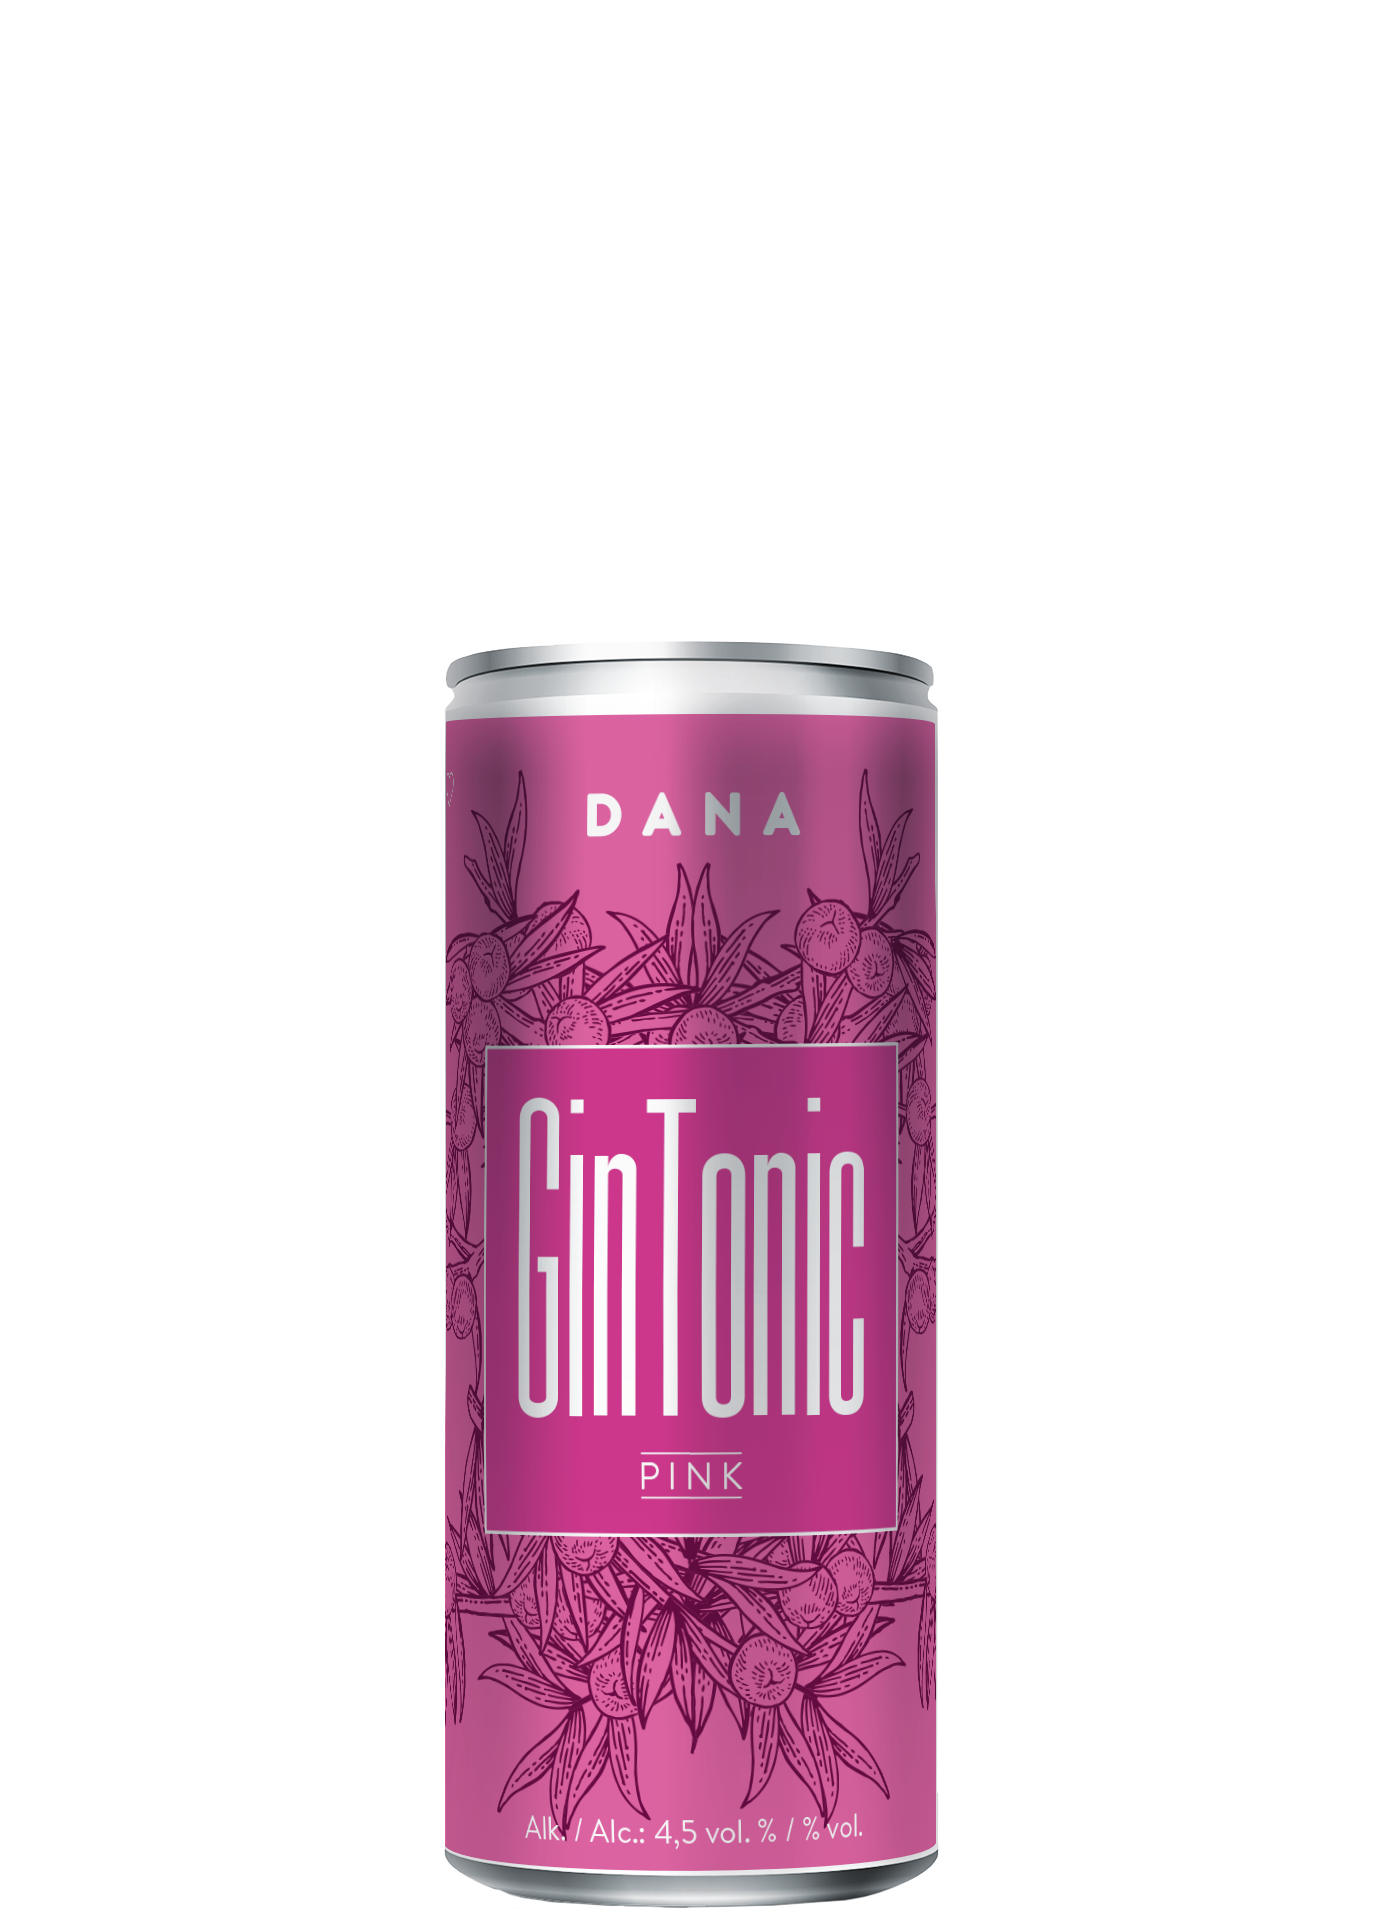 Dana Gin Tonik, pink, alk.: 4,5 vol. %